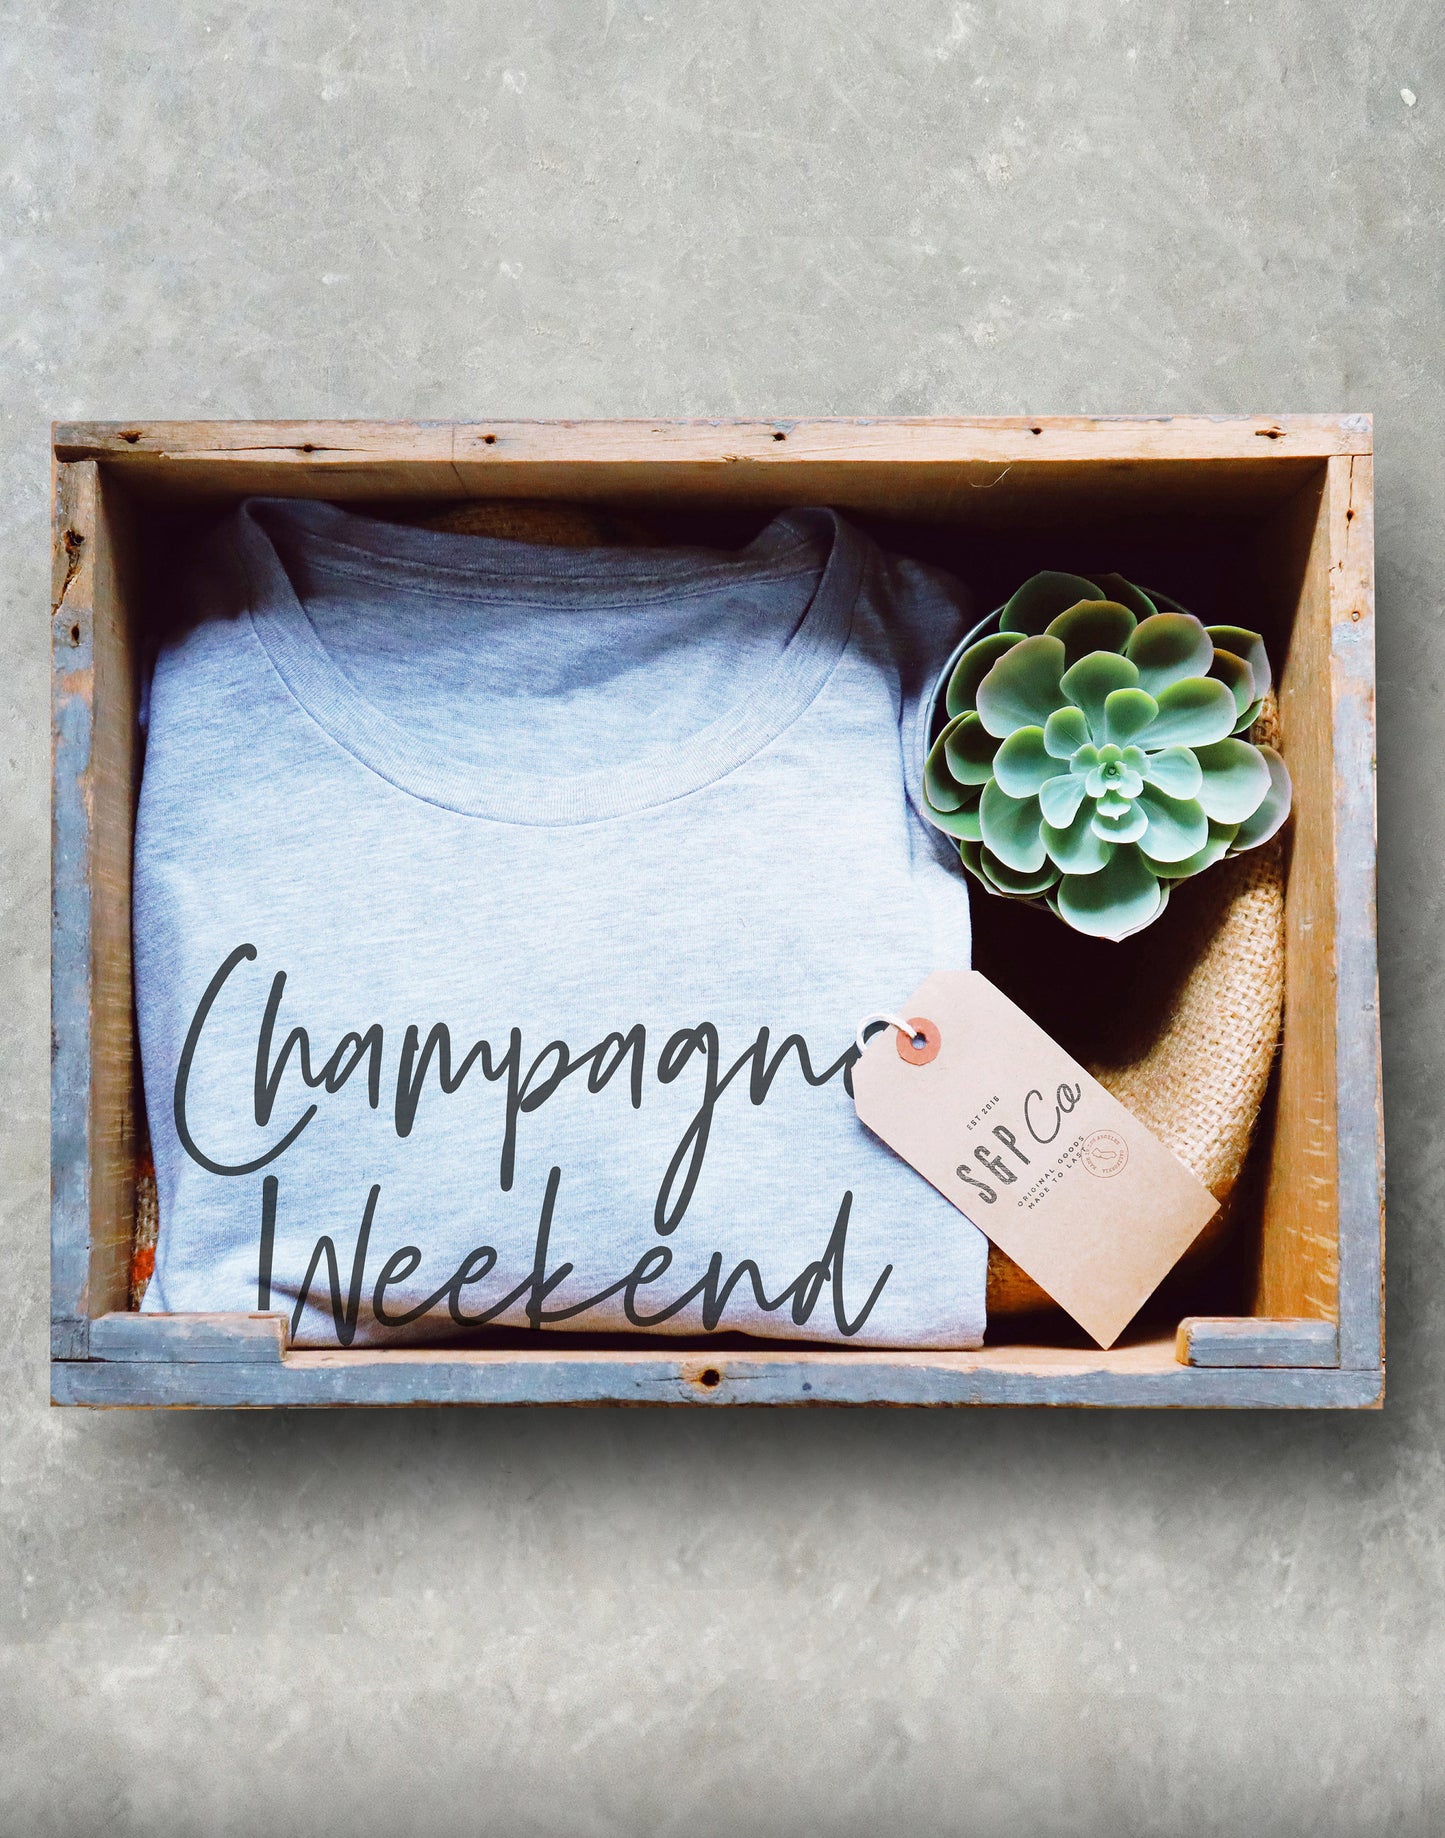 Champagne Weekend Unisex Shirt - Champagne Shirt, Drunk Shirt, Bride Shirt, Bridal Shower Gift, Wine Shirt, Bachelorette Party, Brunch Shirt